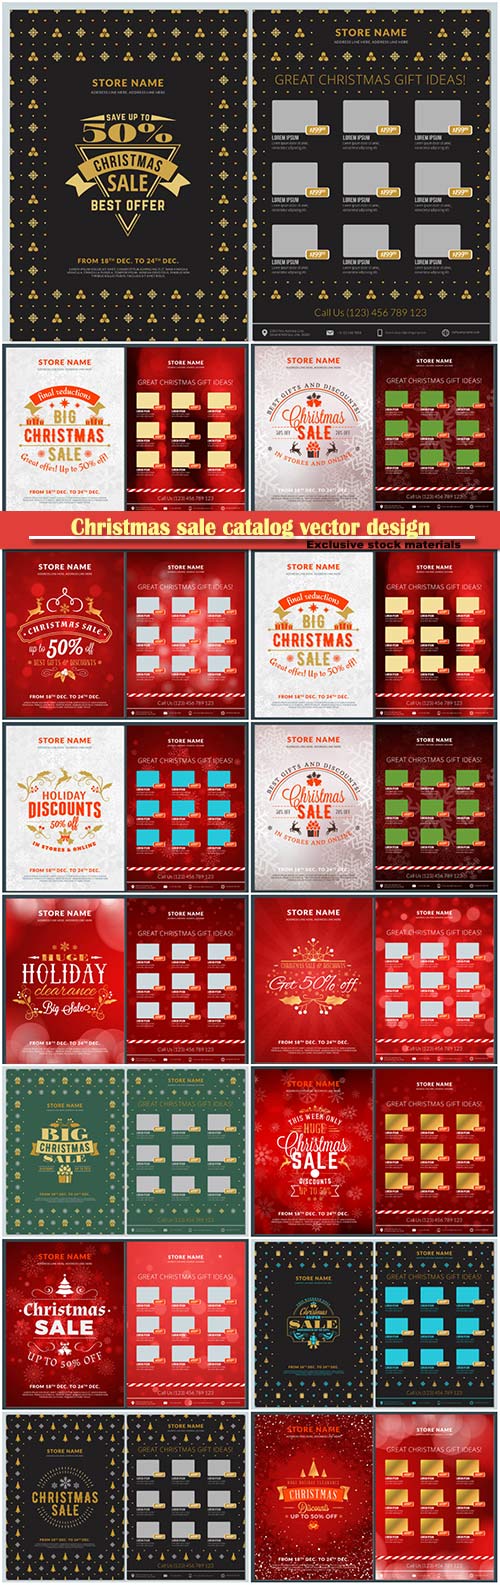 Christmas sale catalog vector design, business flyer template